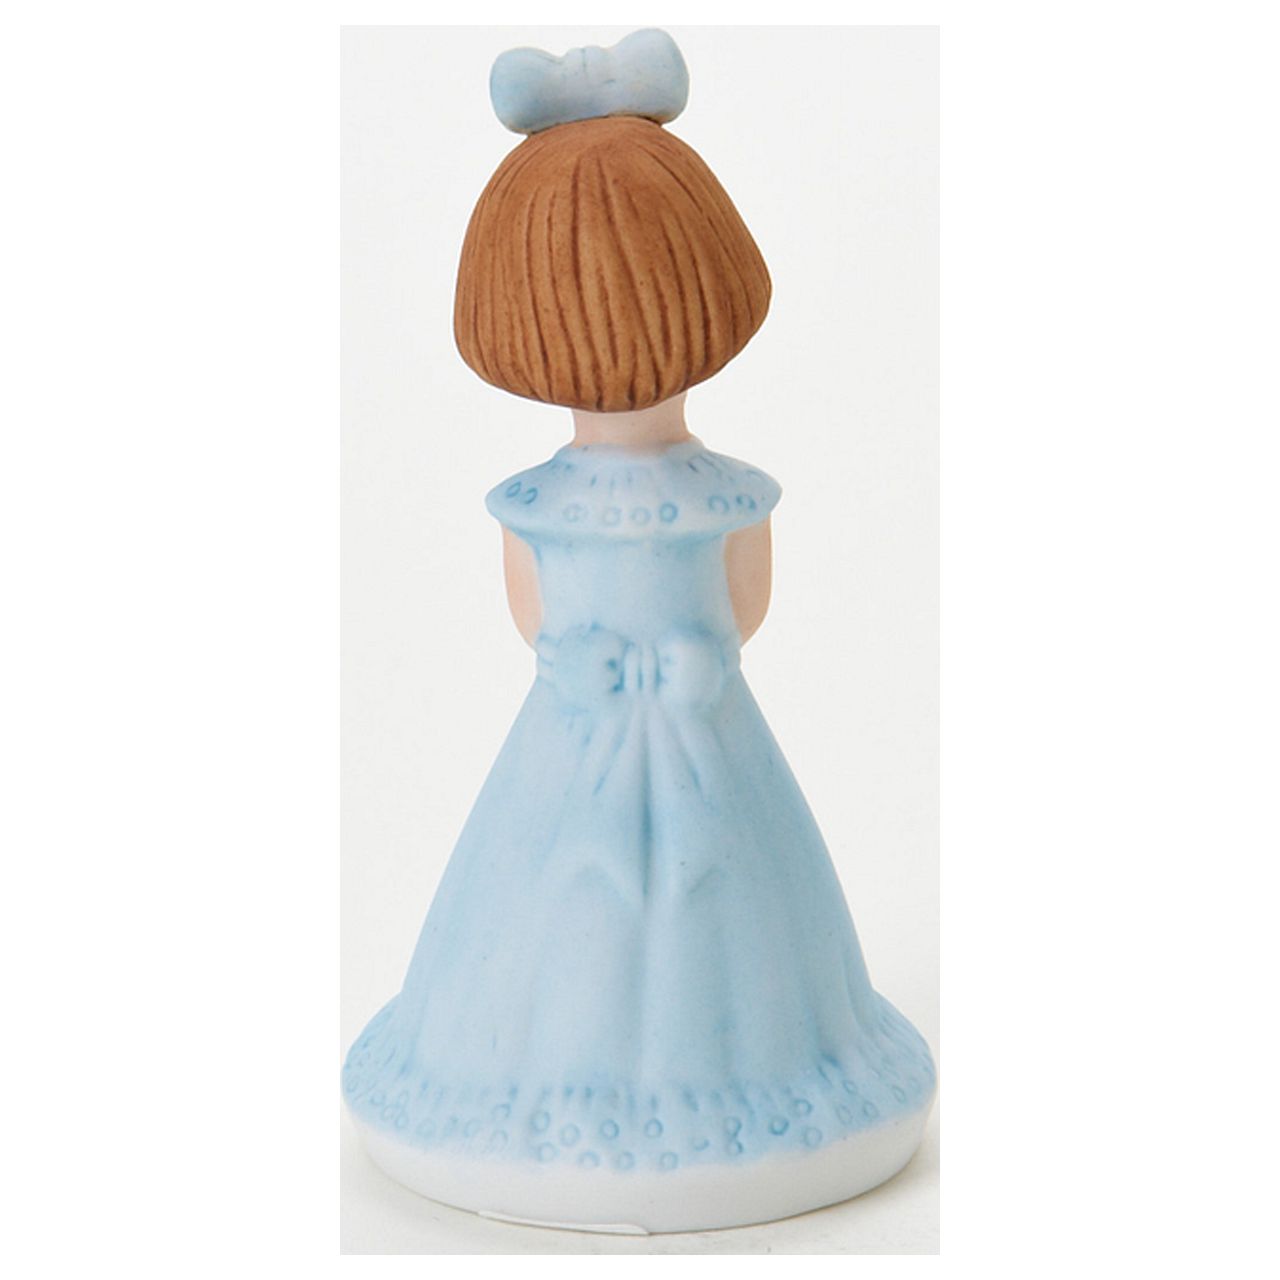 Growing Up Birthday Girls Brunette Age 2 Porcelain Bisque Figurine Q-GL648 - image 2 of 5